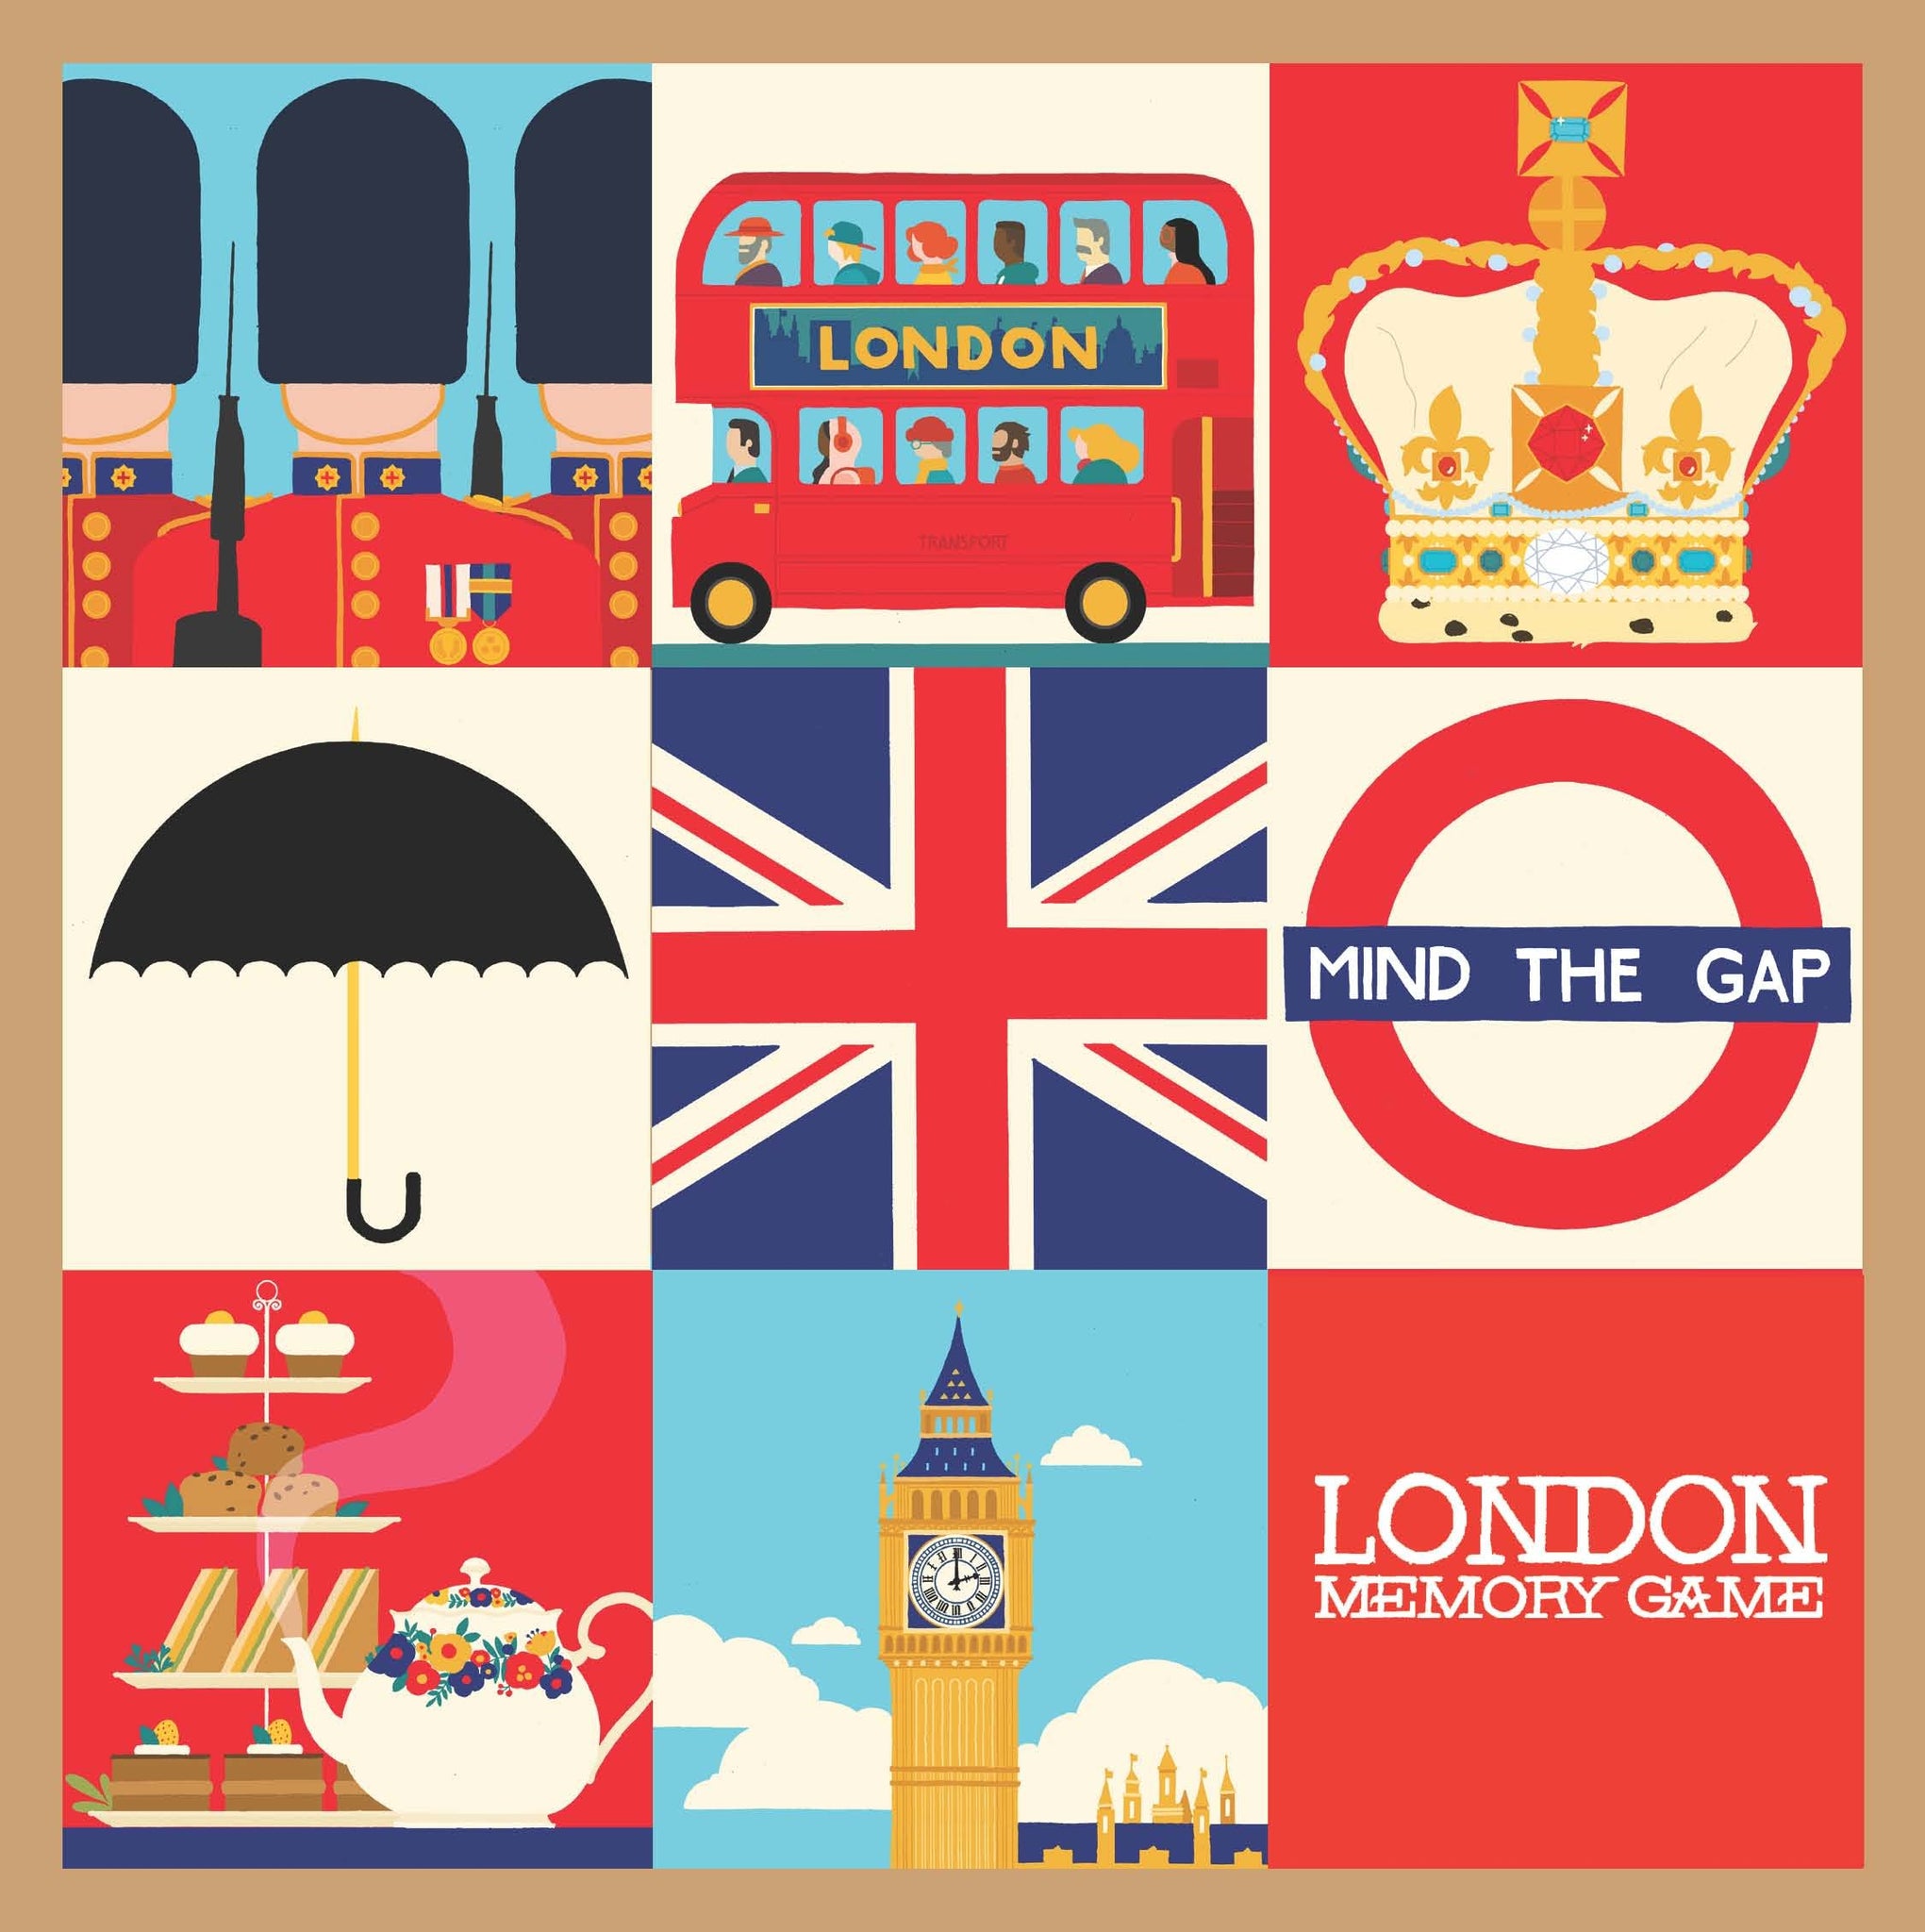 London Memory Game cover